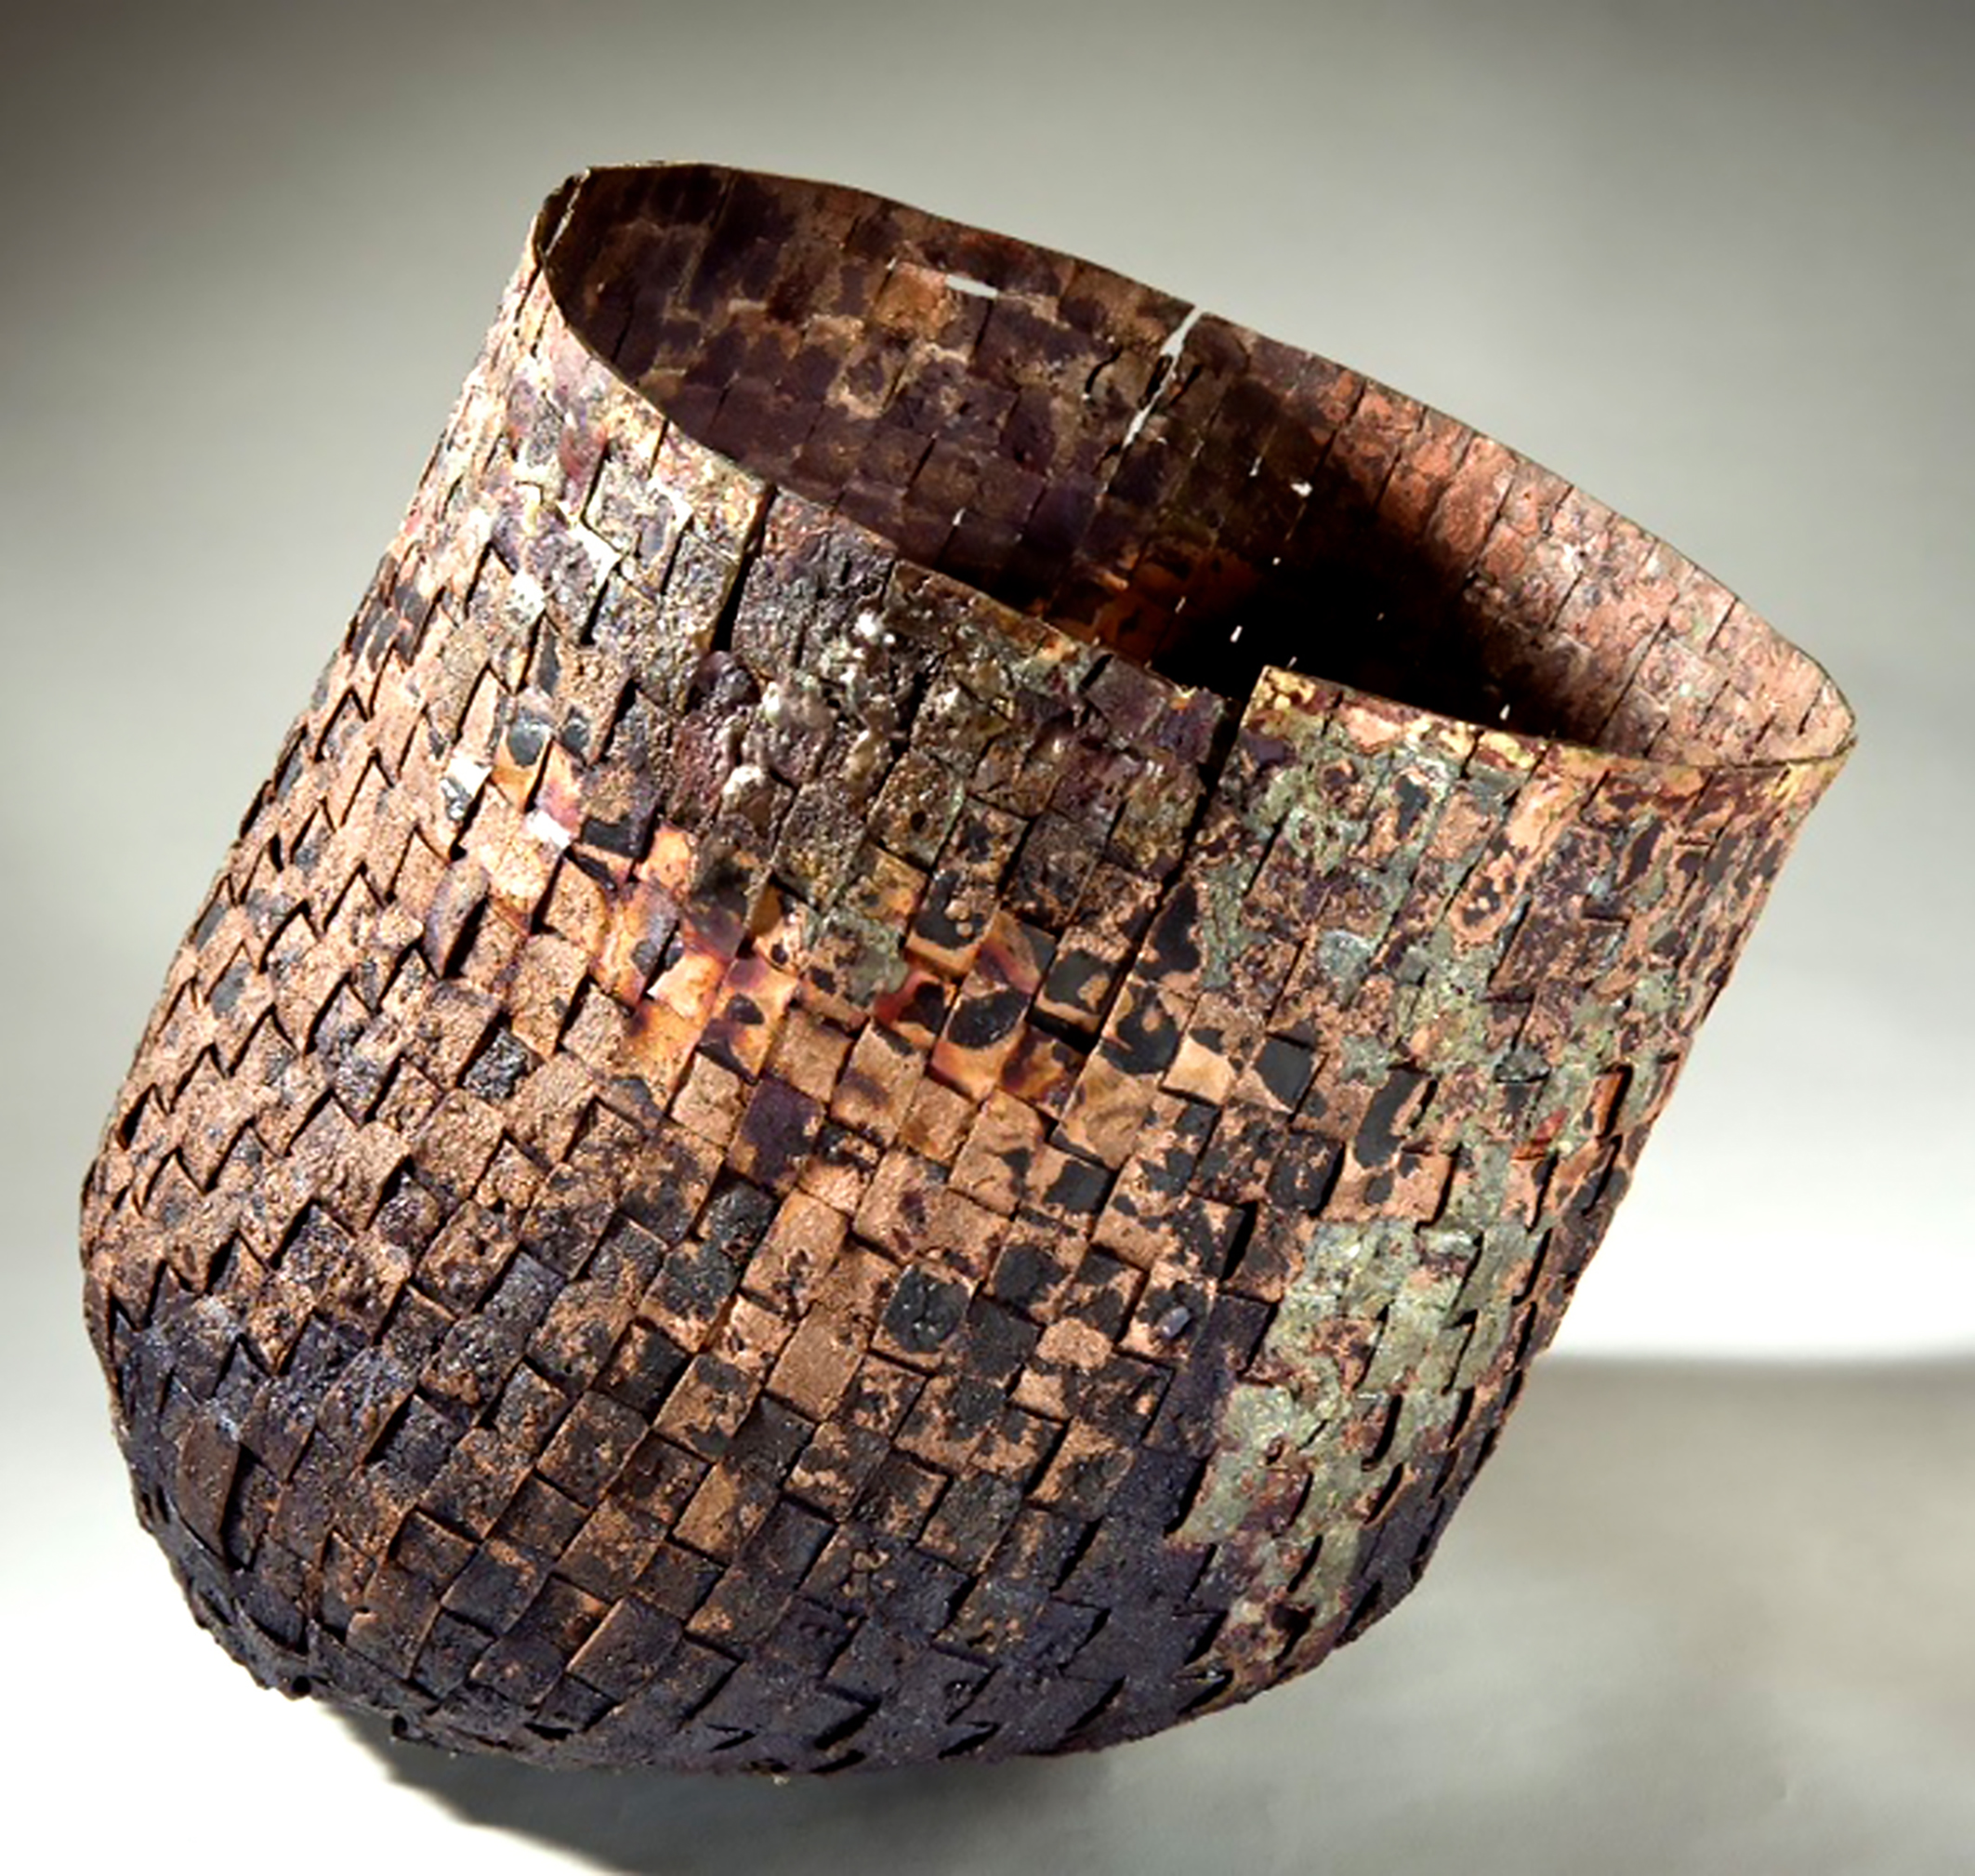 #copper, #woven metal, #woven copper, #recycling, # environmental art, #tea bowl, #basket, #baskets, #woven copper baskets, #woven metal baskets